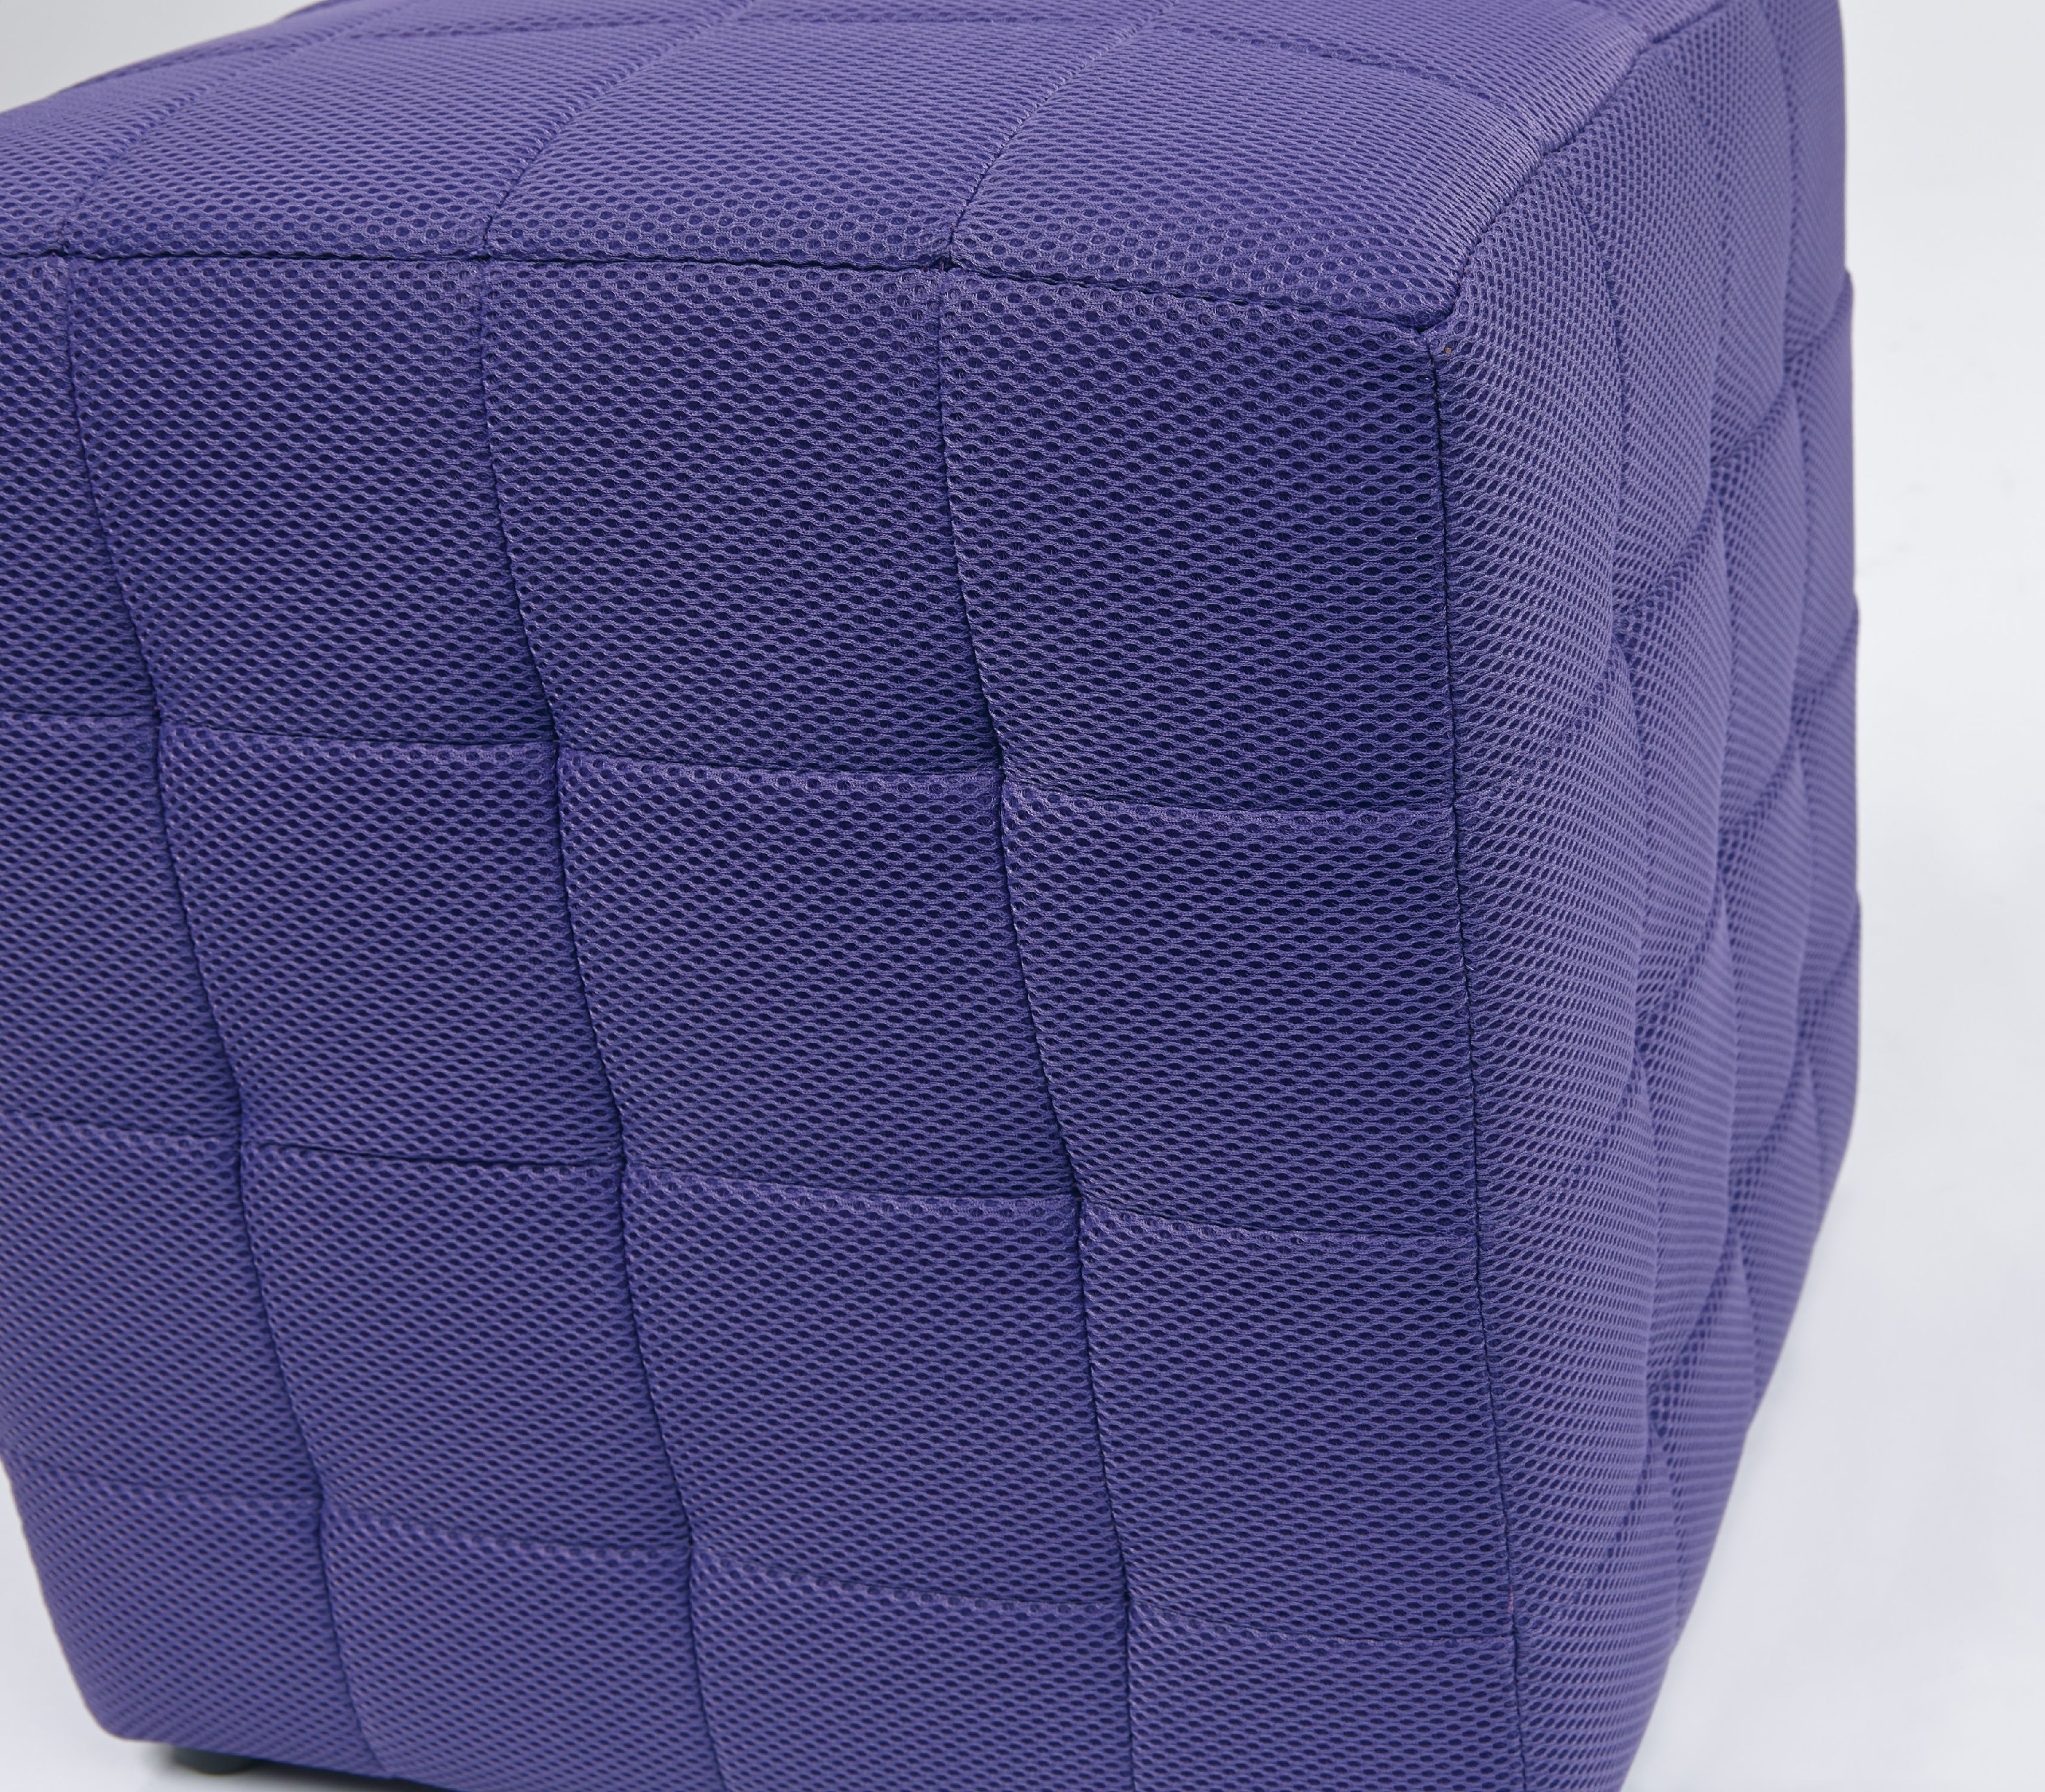 OSP Home Furnishings Detour 15" Purple Fabric Cube - image 2 of 9